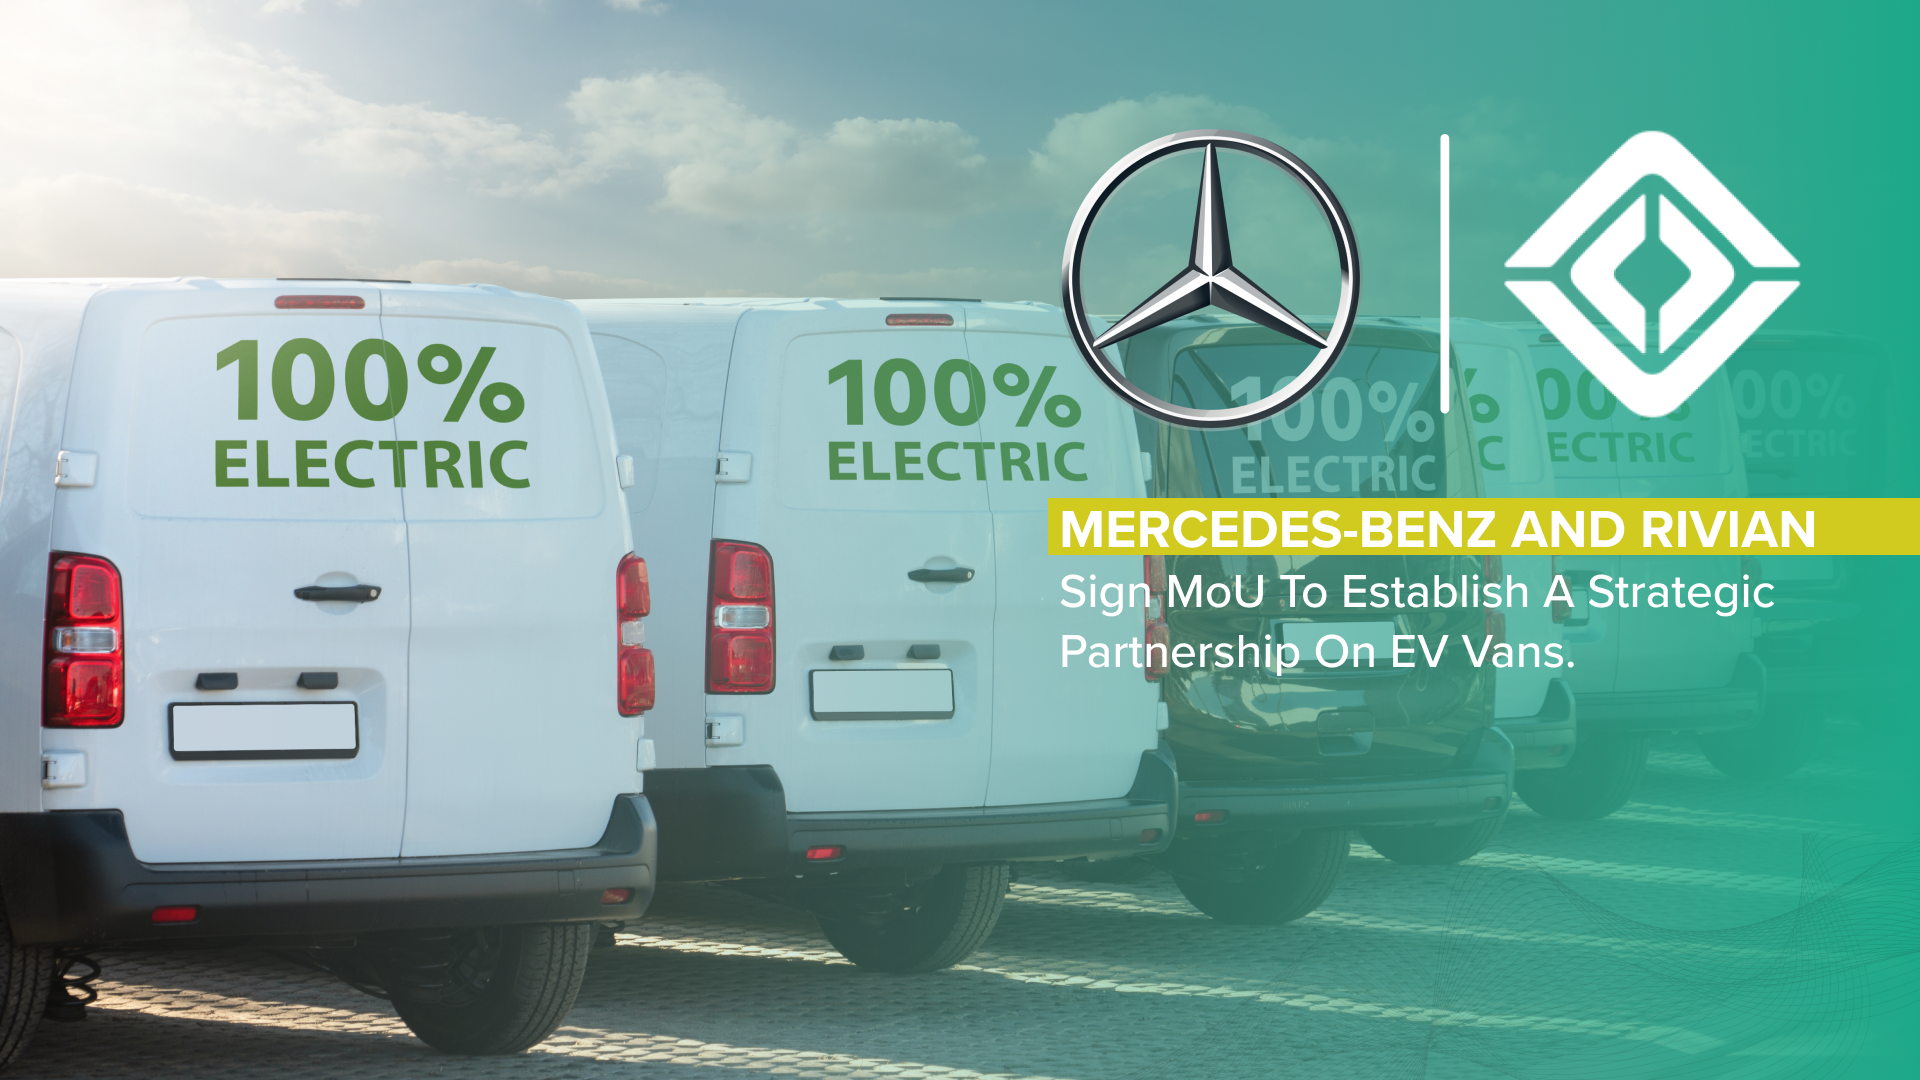 Mercedes-Benz and Rivian Sign MoU To Establish A Strategic Partnership On EV Vans.